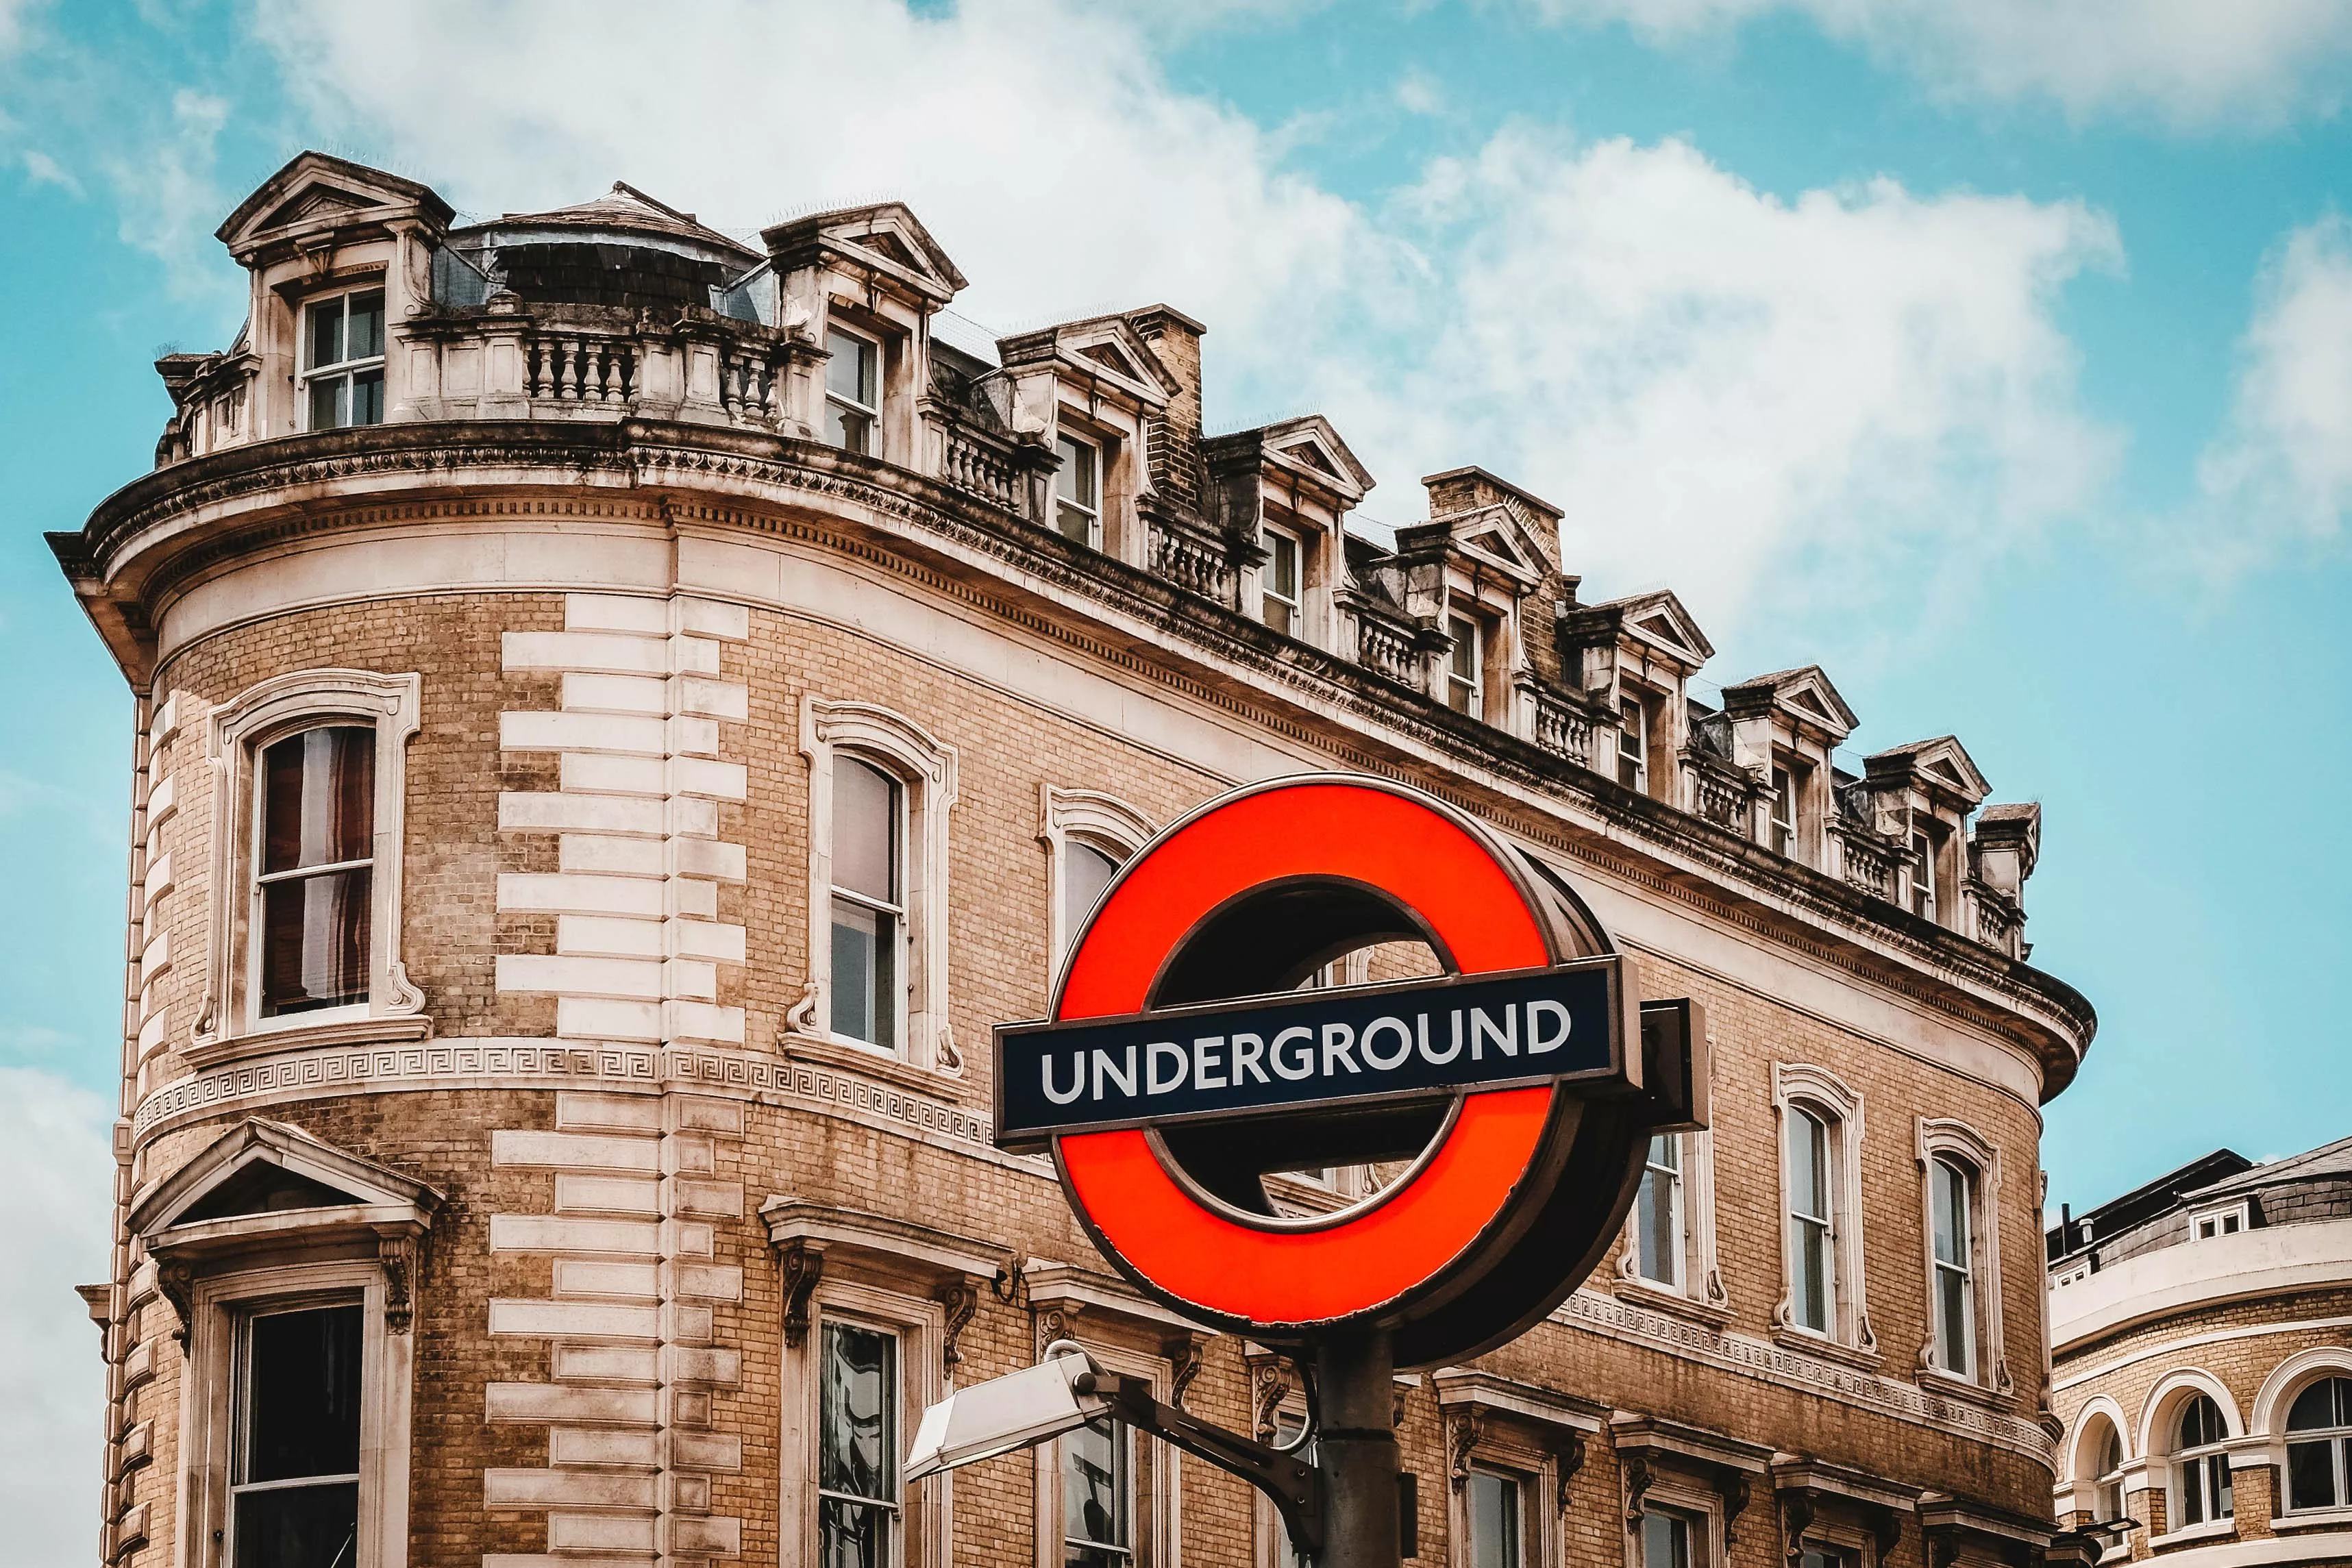 London underground sign against a Victorian corner building